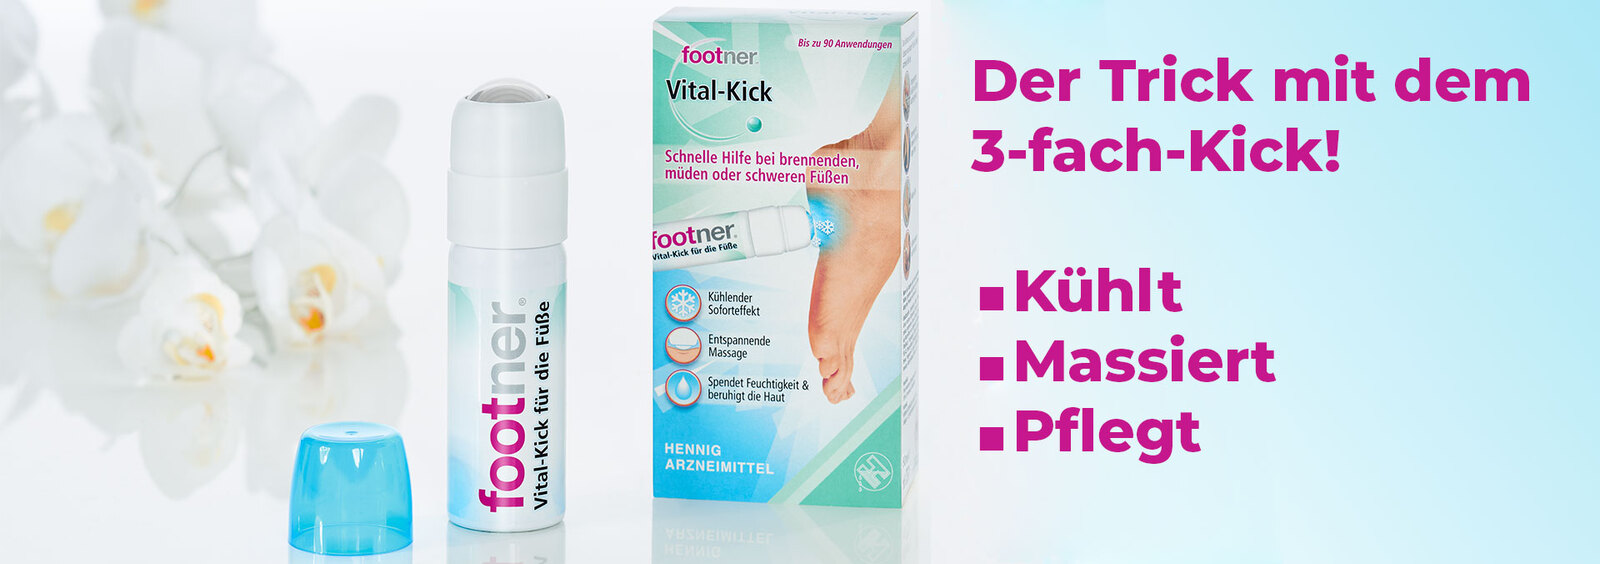 footner Vital-Kick Verpackung - Text: Der Trick mit dem 3fach-Kick! kühlt, massiert, pflegt